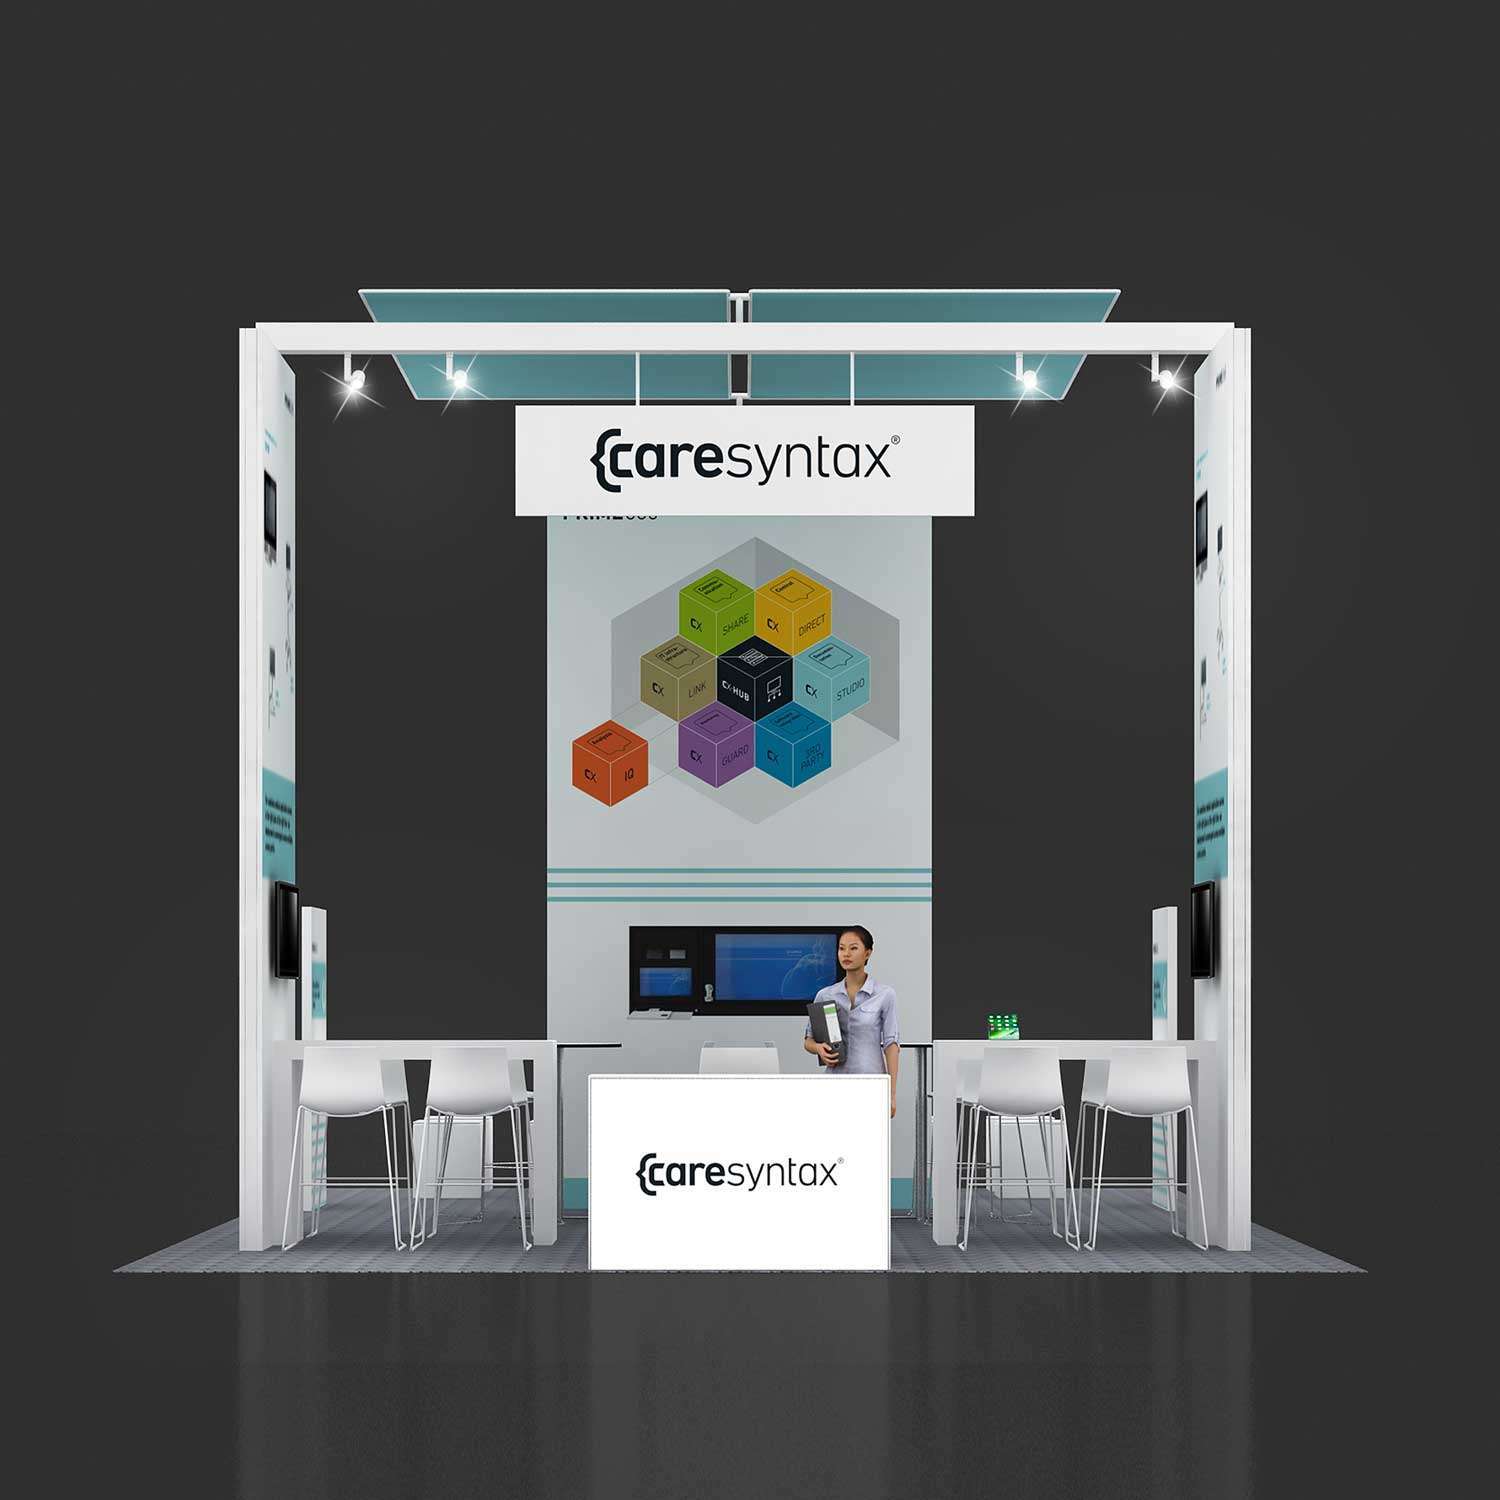 Design Ideas for a 20x30 Trade Show Booth